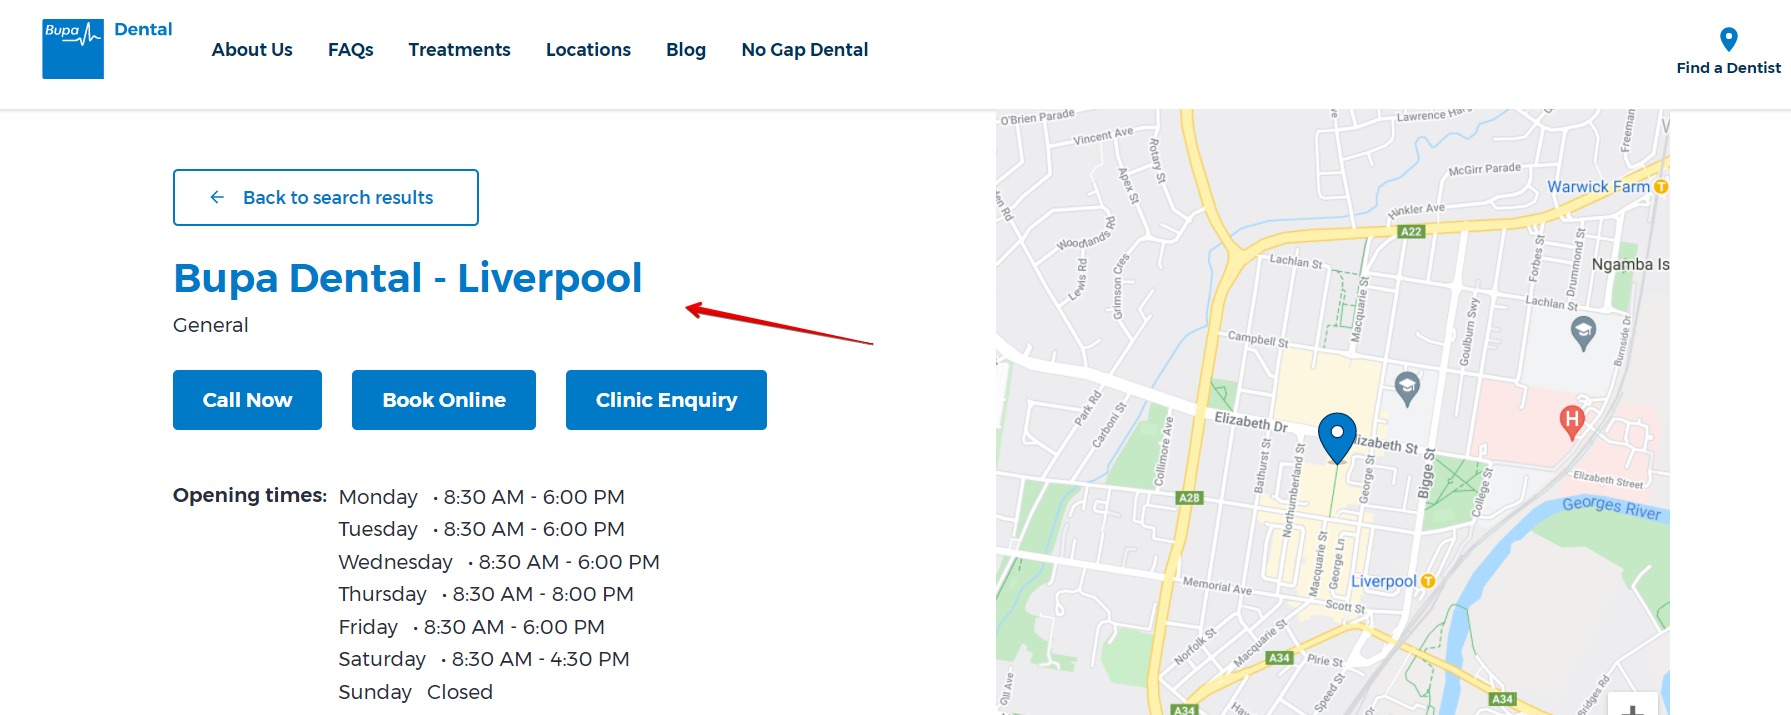 Bupa dental liverpool website screenshot